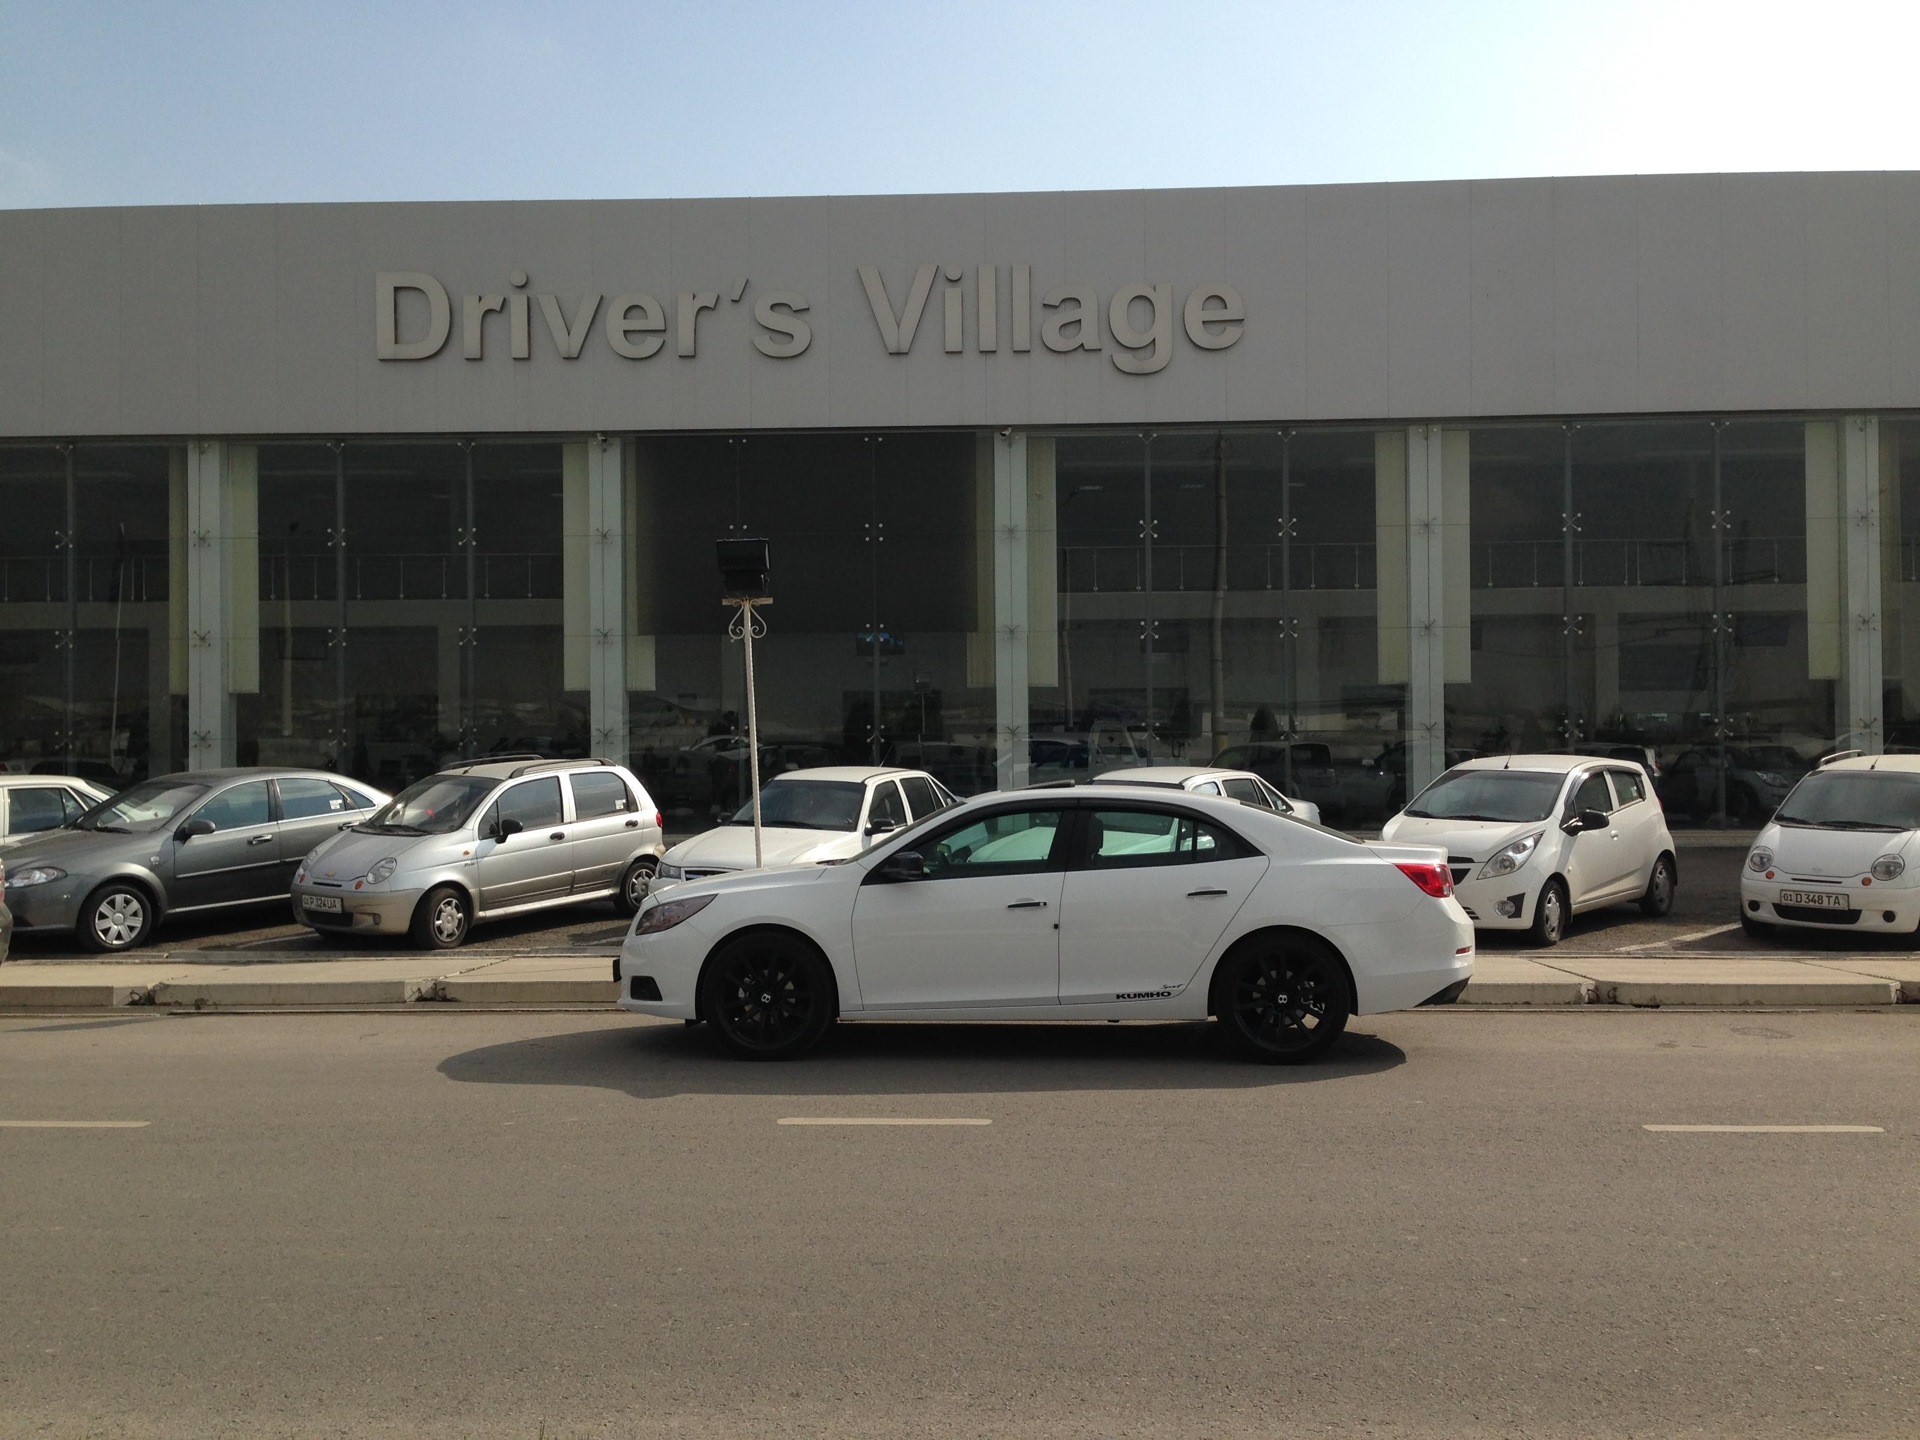 Drives village. Drivers Village. Driver Village автосалон. Drivers Village Ташкент автосалон. ООО Drivers Village.